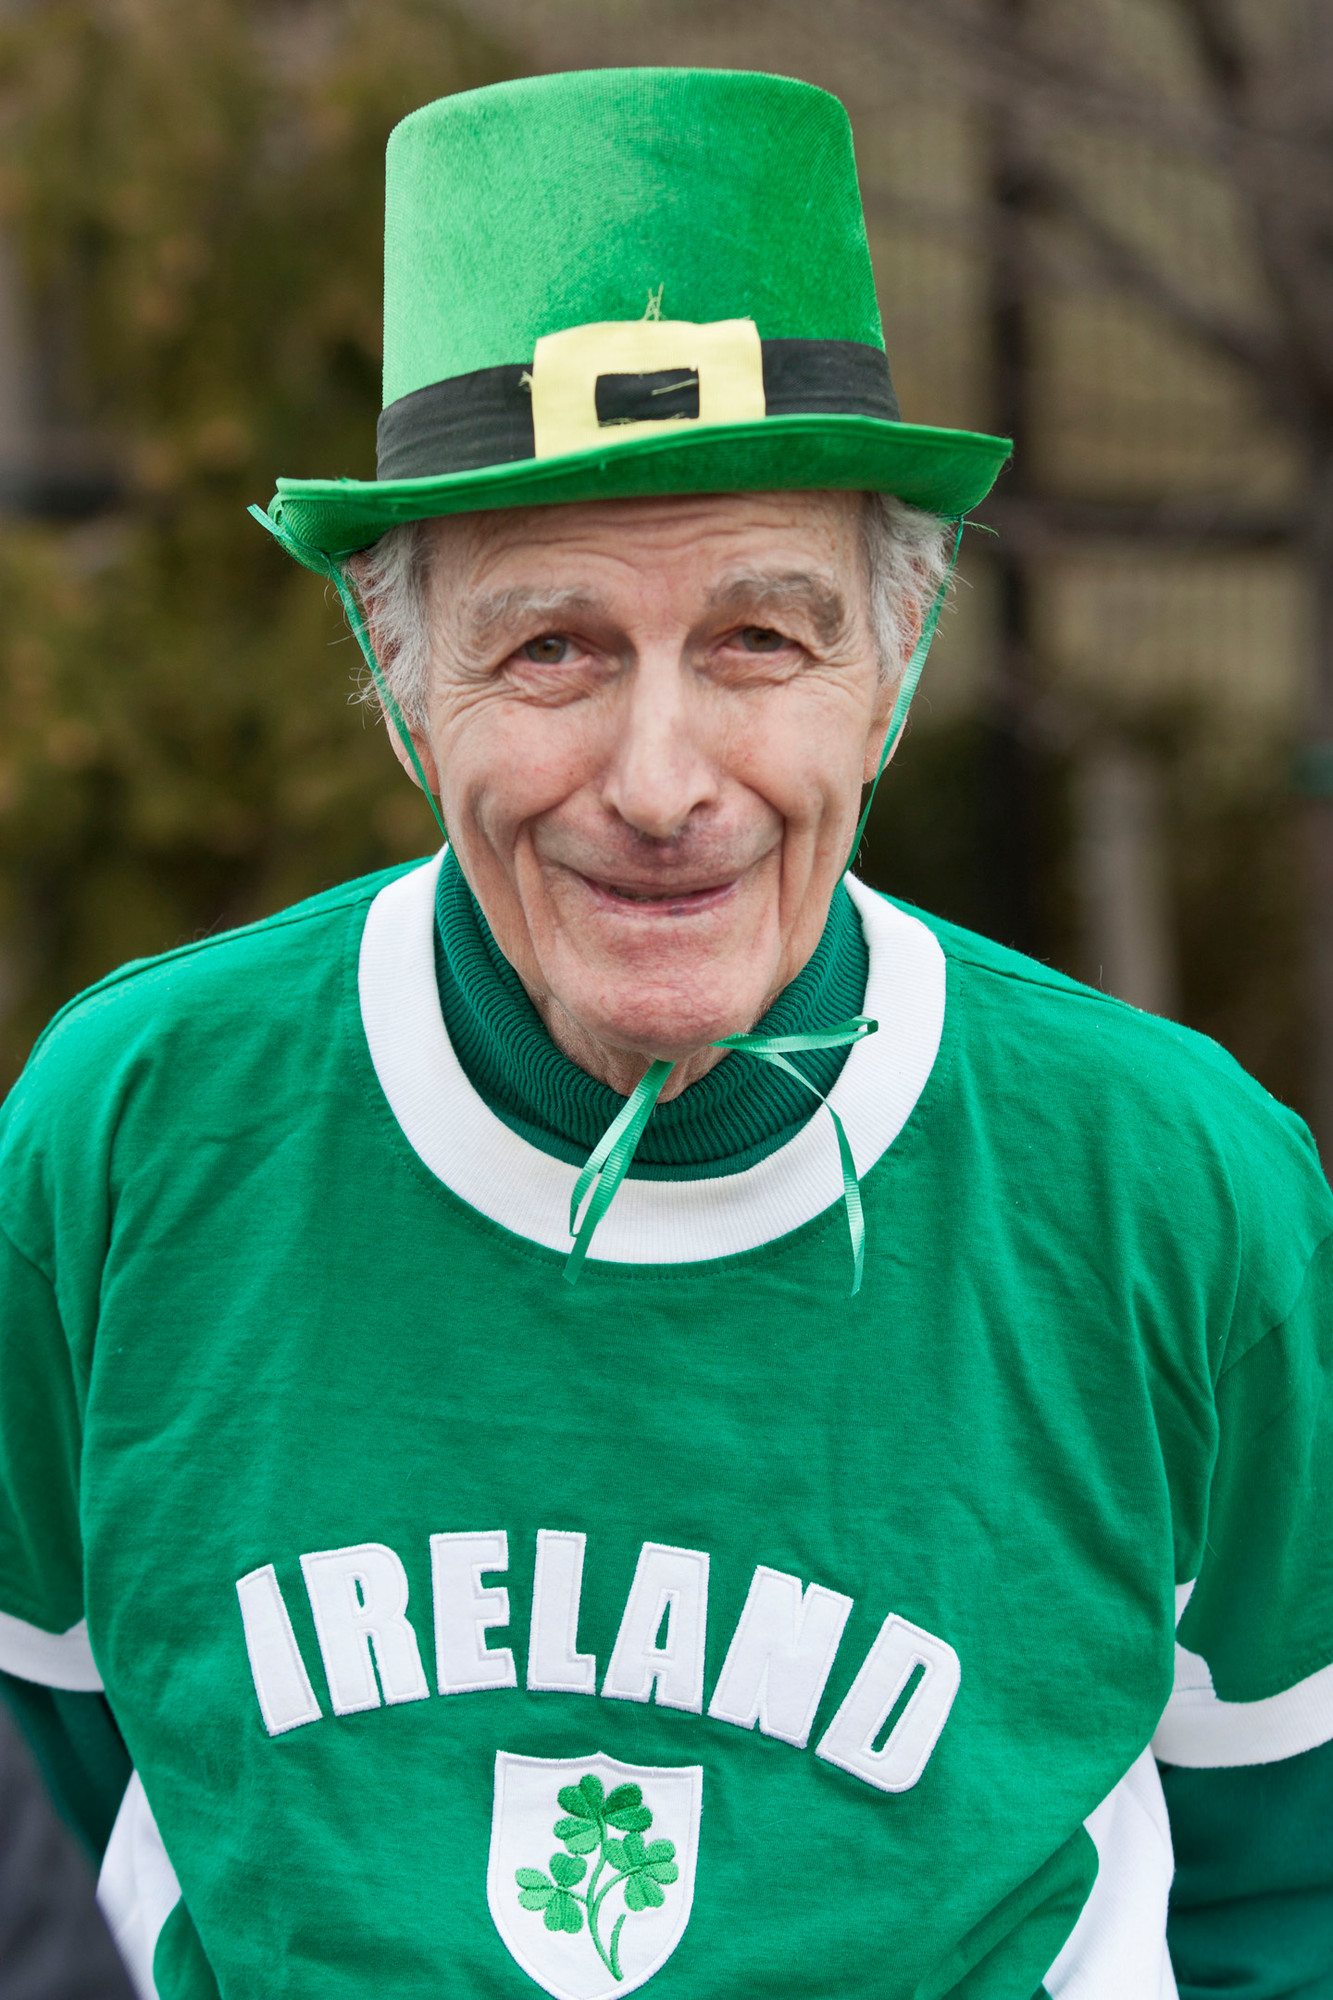 John Boles displayed his Irish pride.